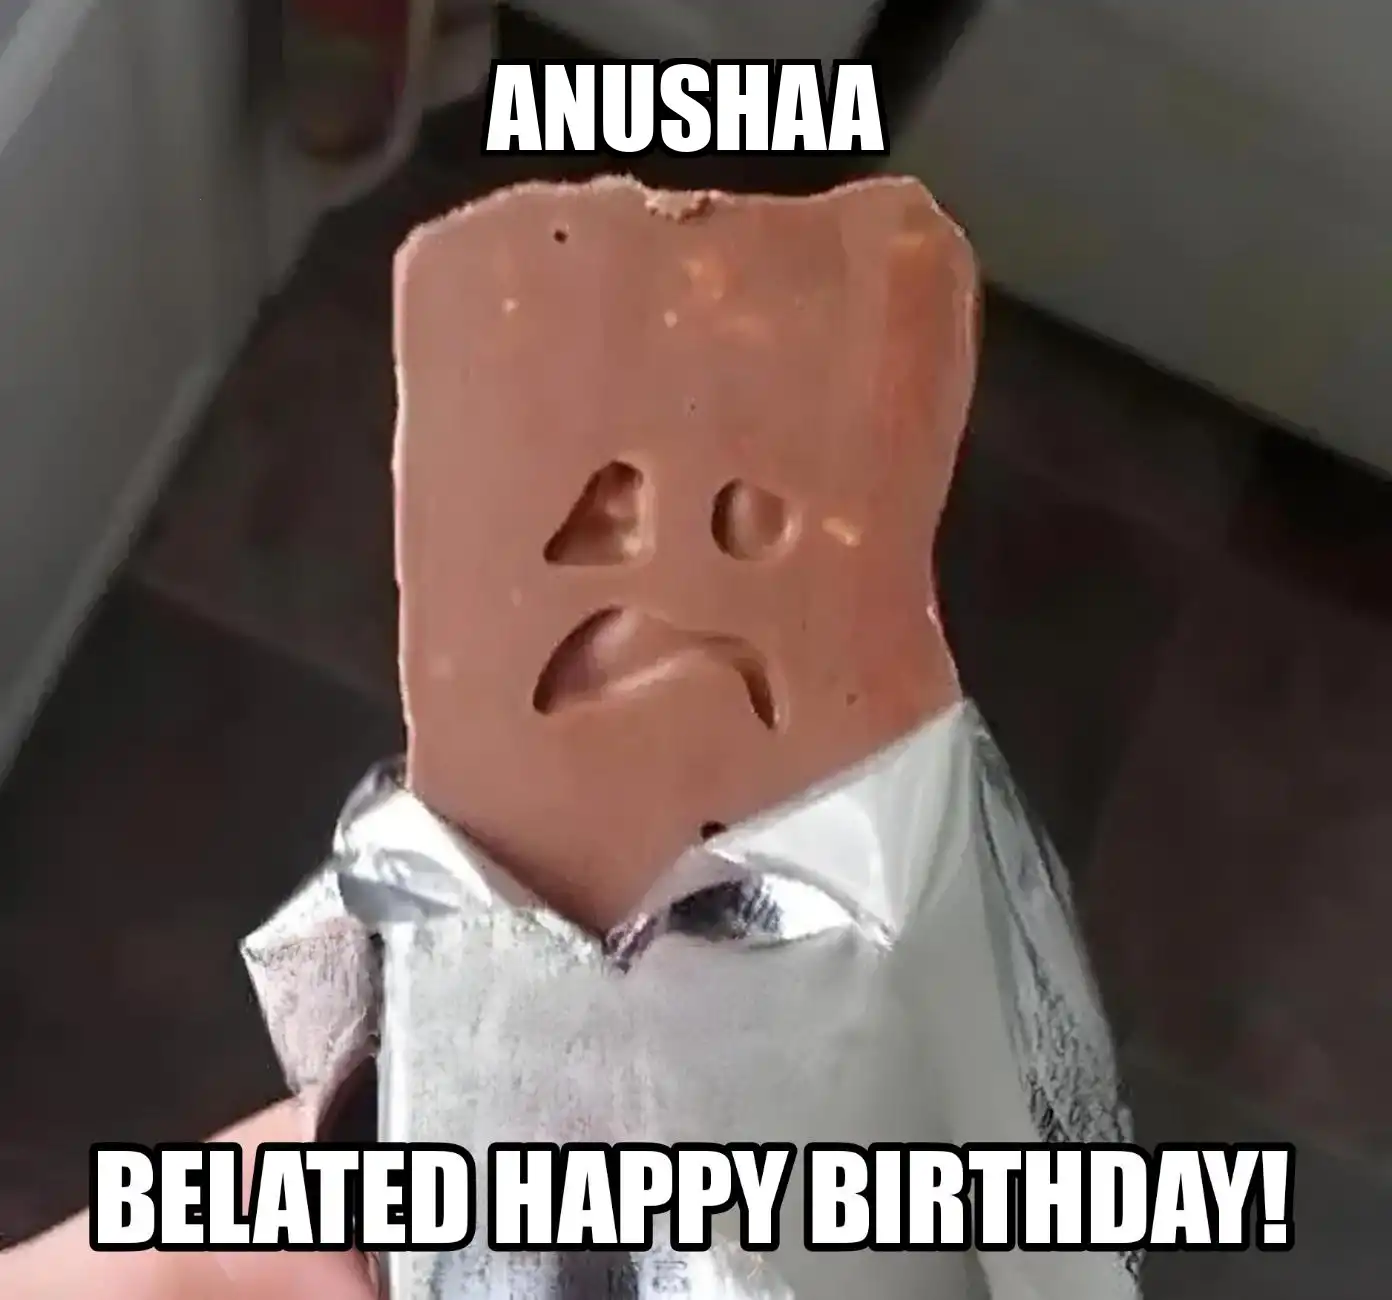 Happy Birthday Anushaa Belated Happy Birthday Meme